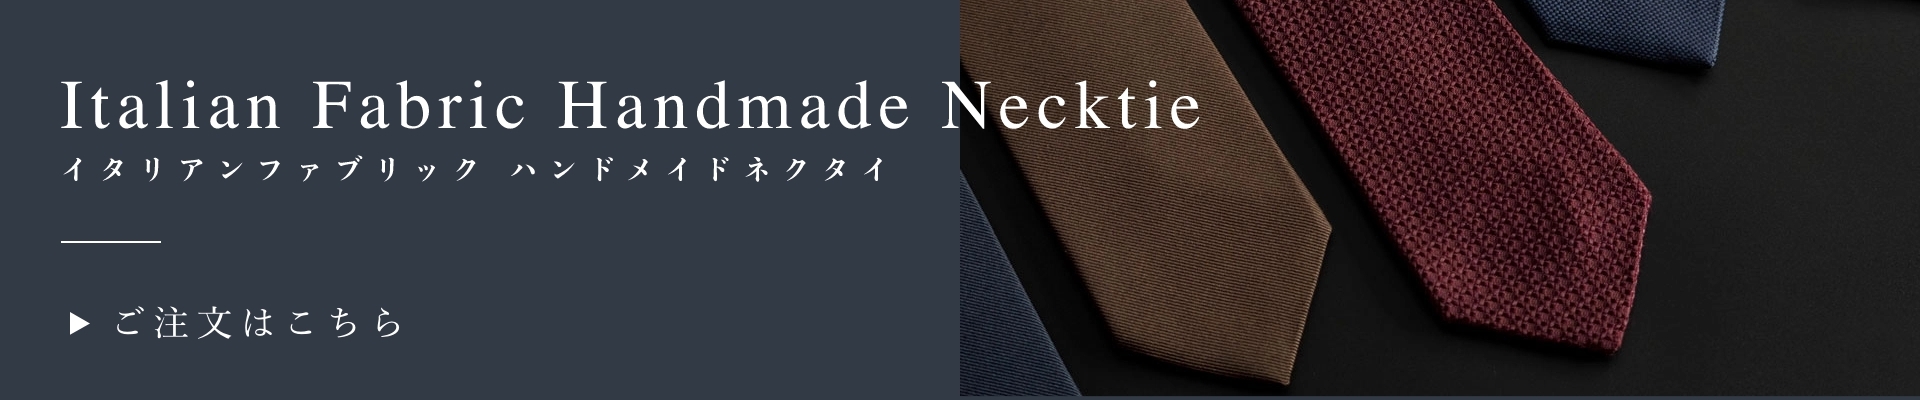 Italian Fabric Handmade Necktie Banner